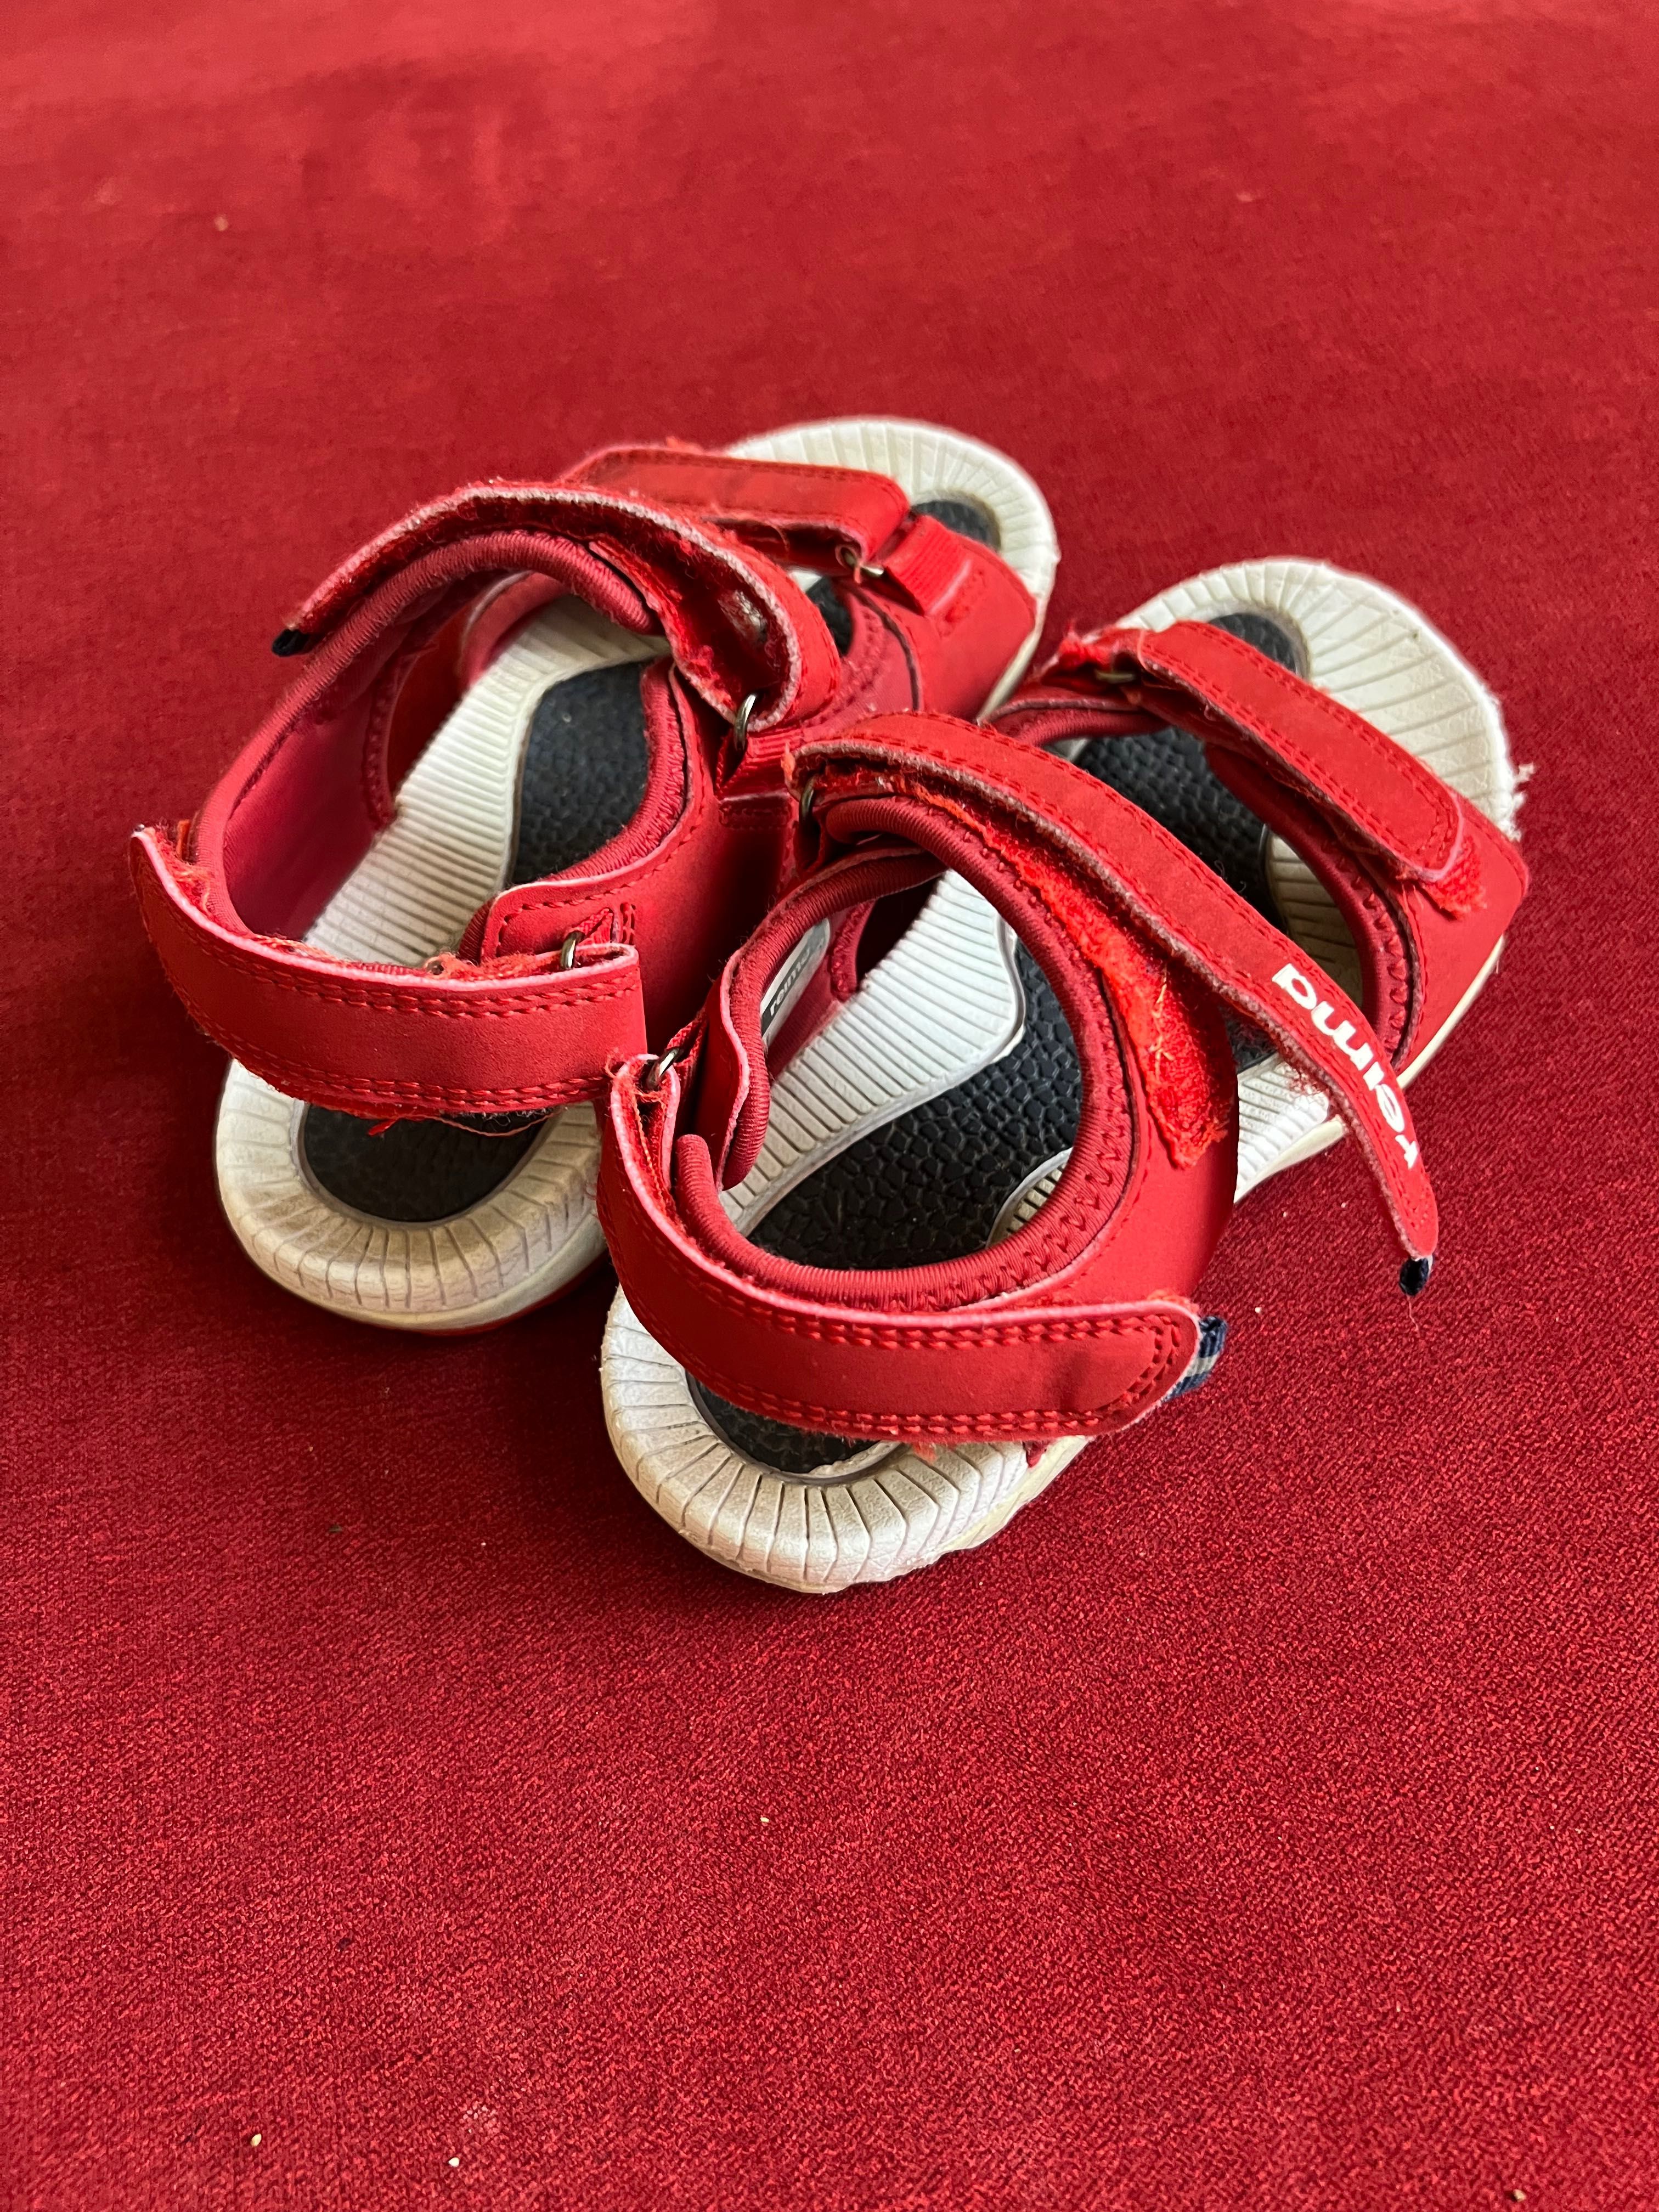 Обувь 31-32 размер, кроссовки Nike, Skechers, босоножки Reima